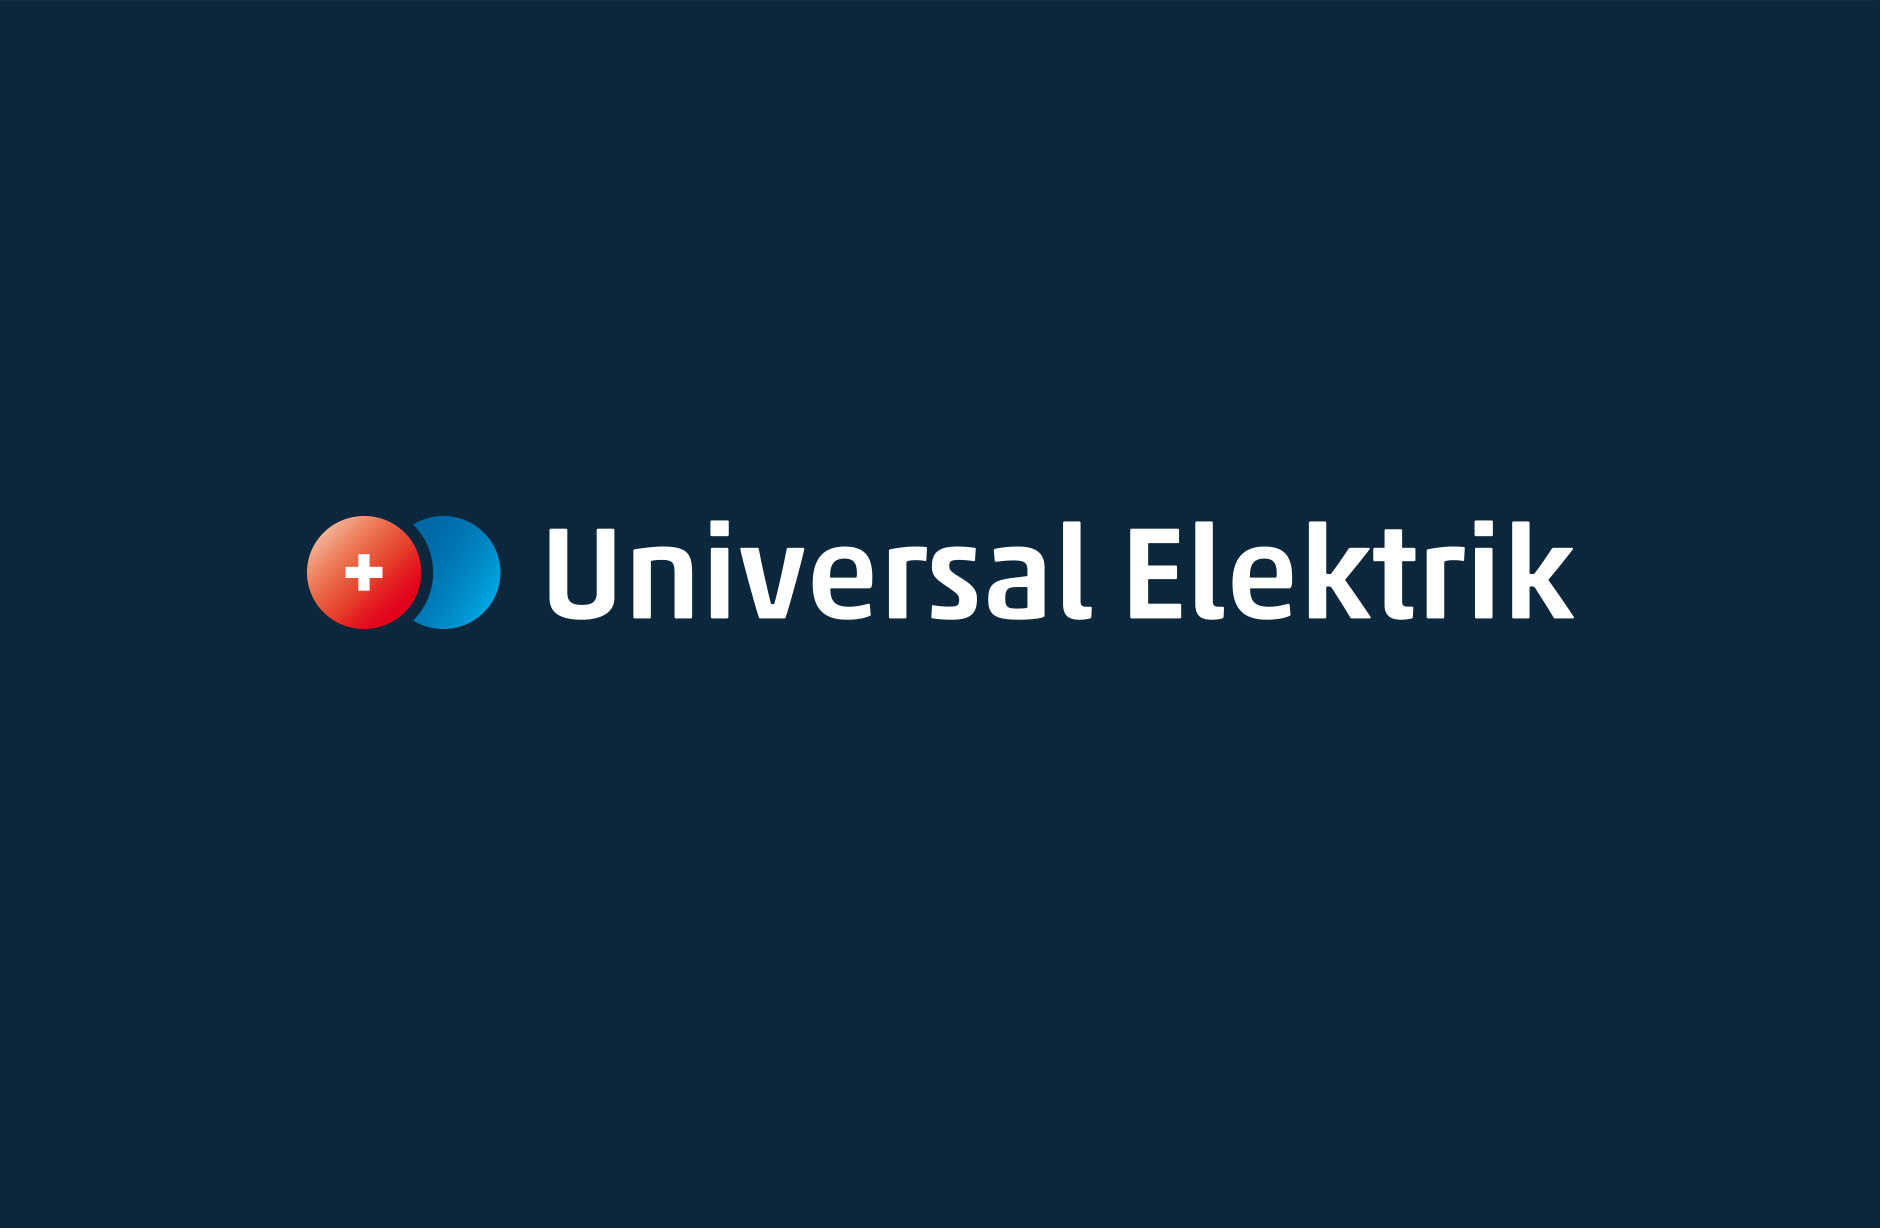 Universal Elektrik Logo invers – Newsign GmbH